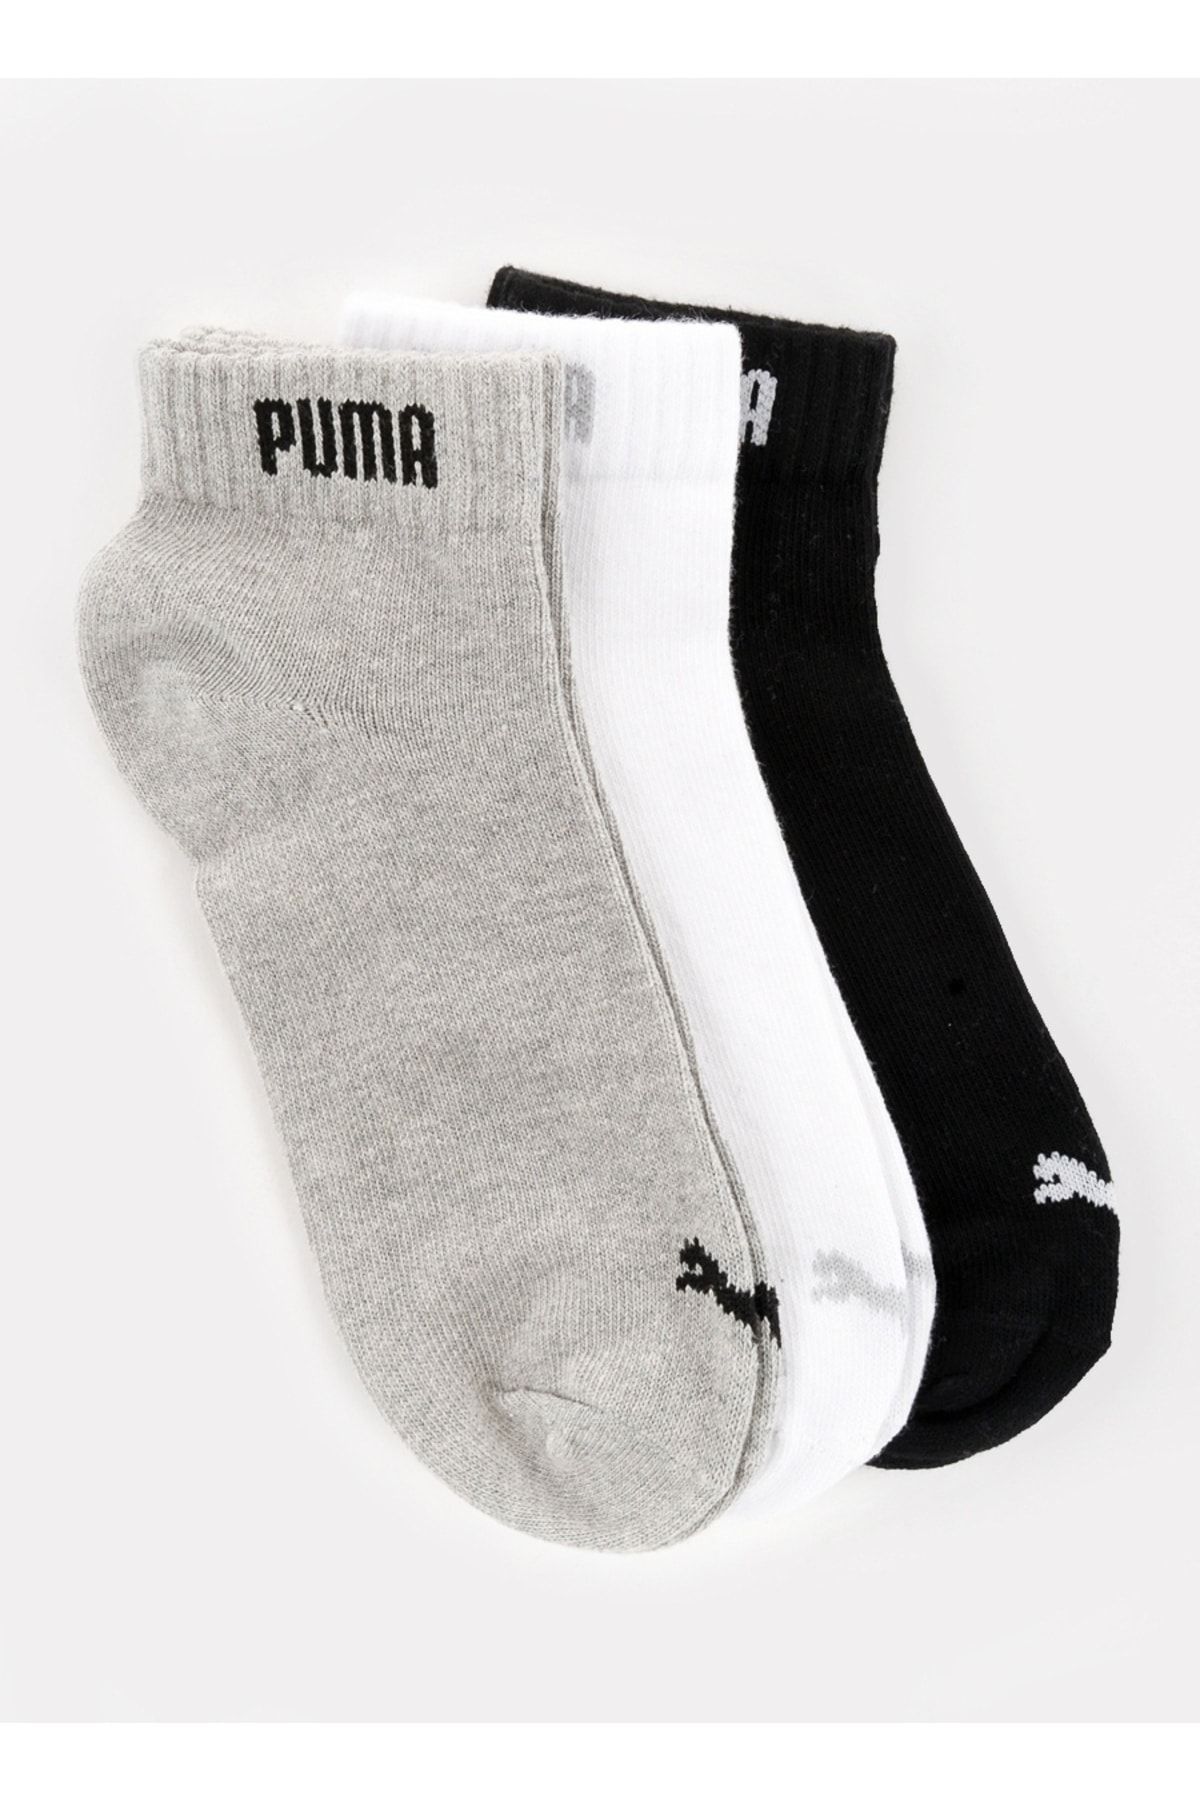 Puma Gri Unisex Spor Çorap